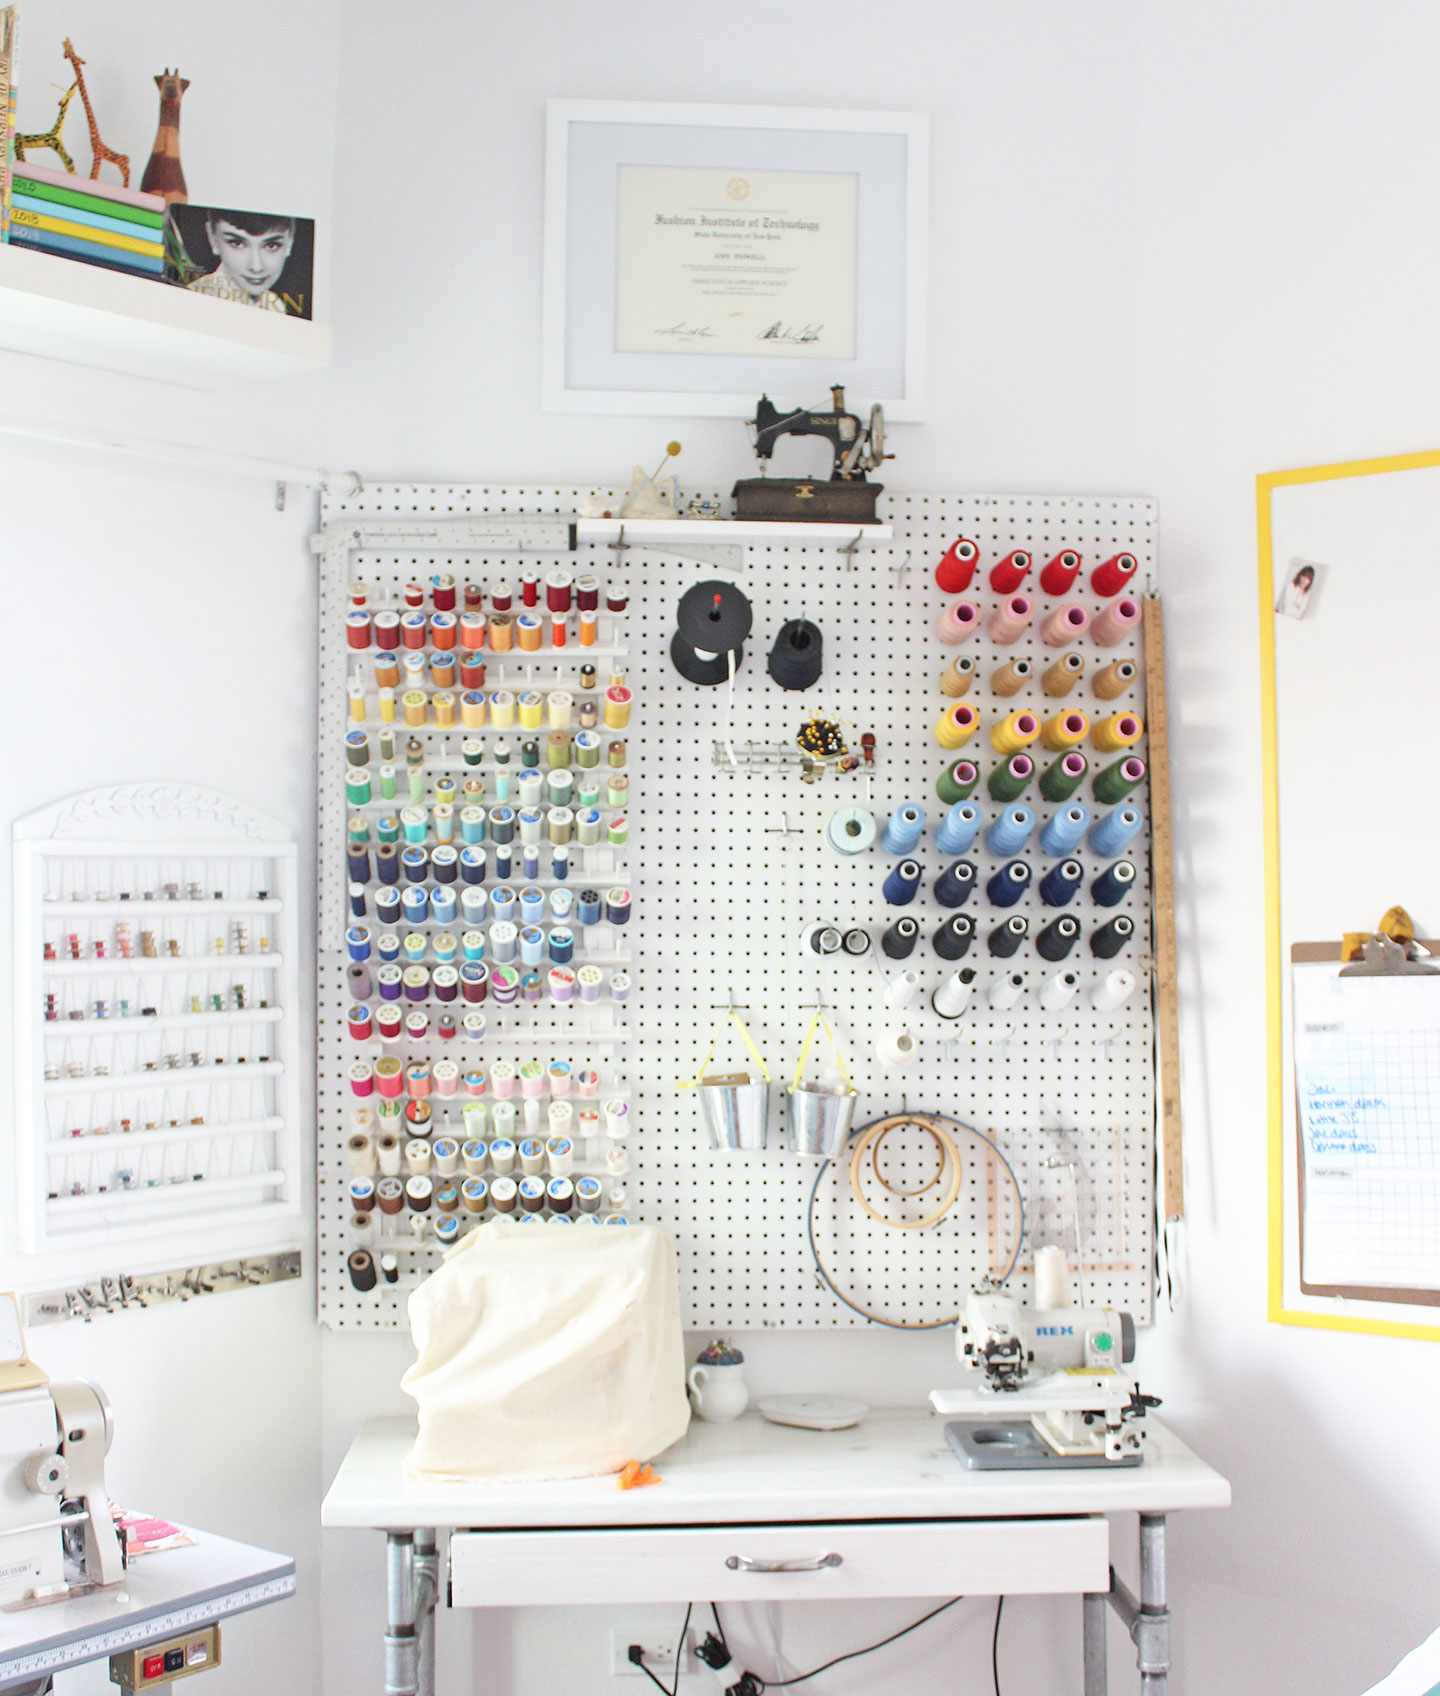 Take a Tour of my New Sewing Studio! - Amy Nicole Studio